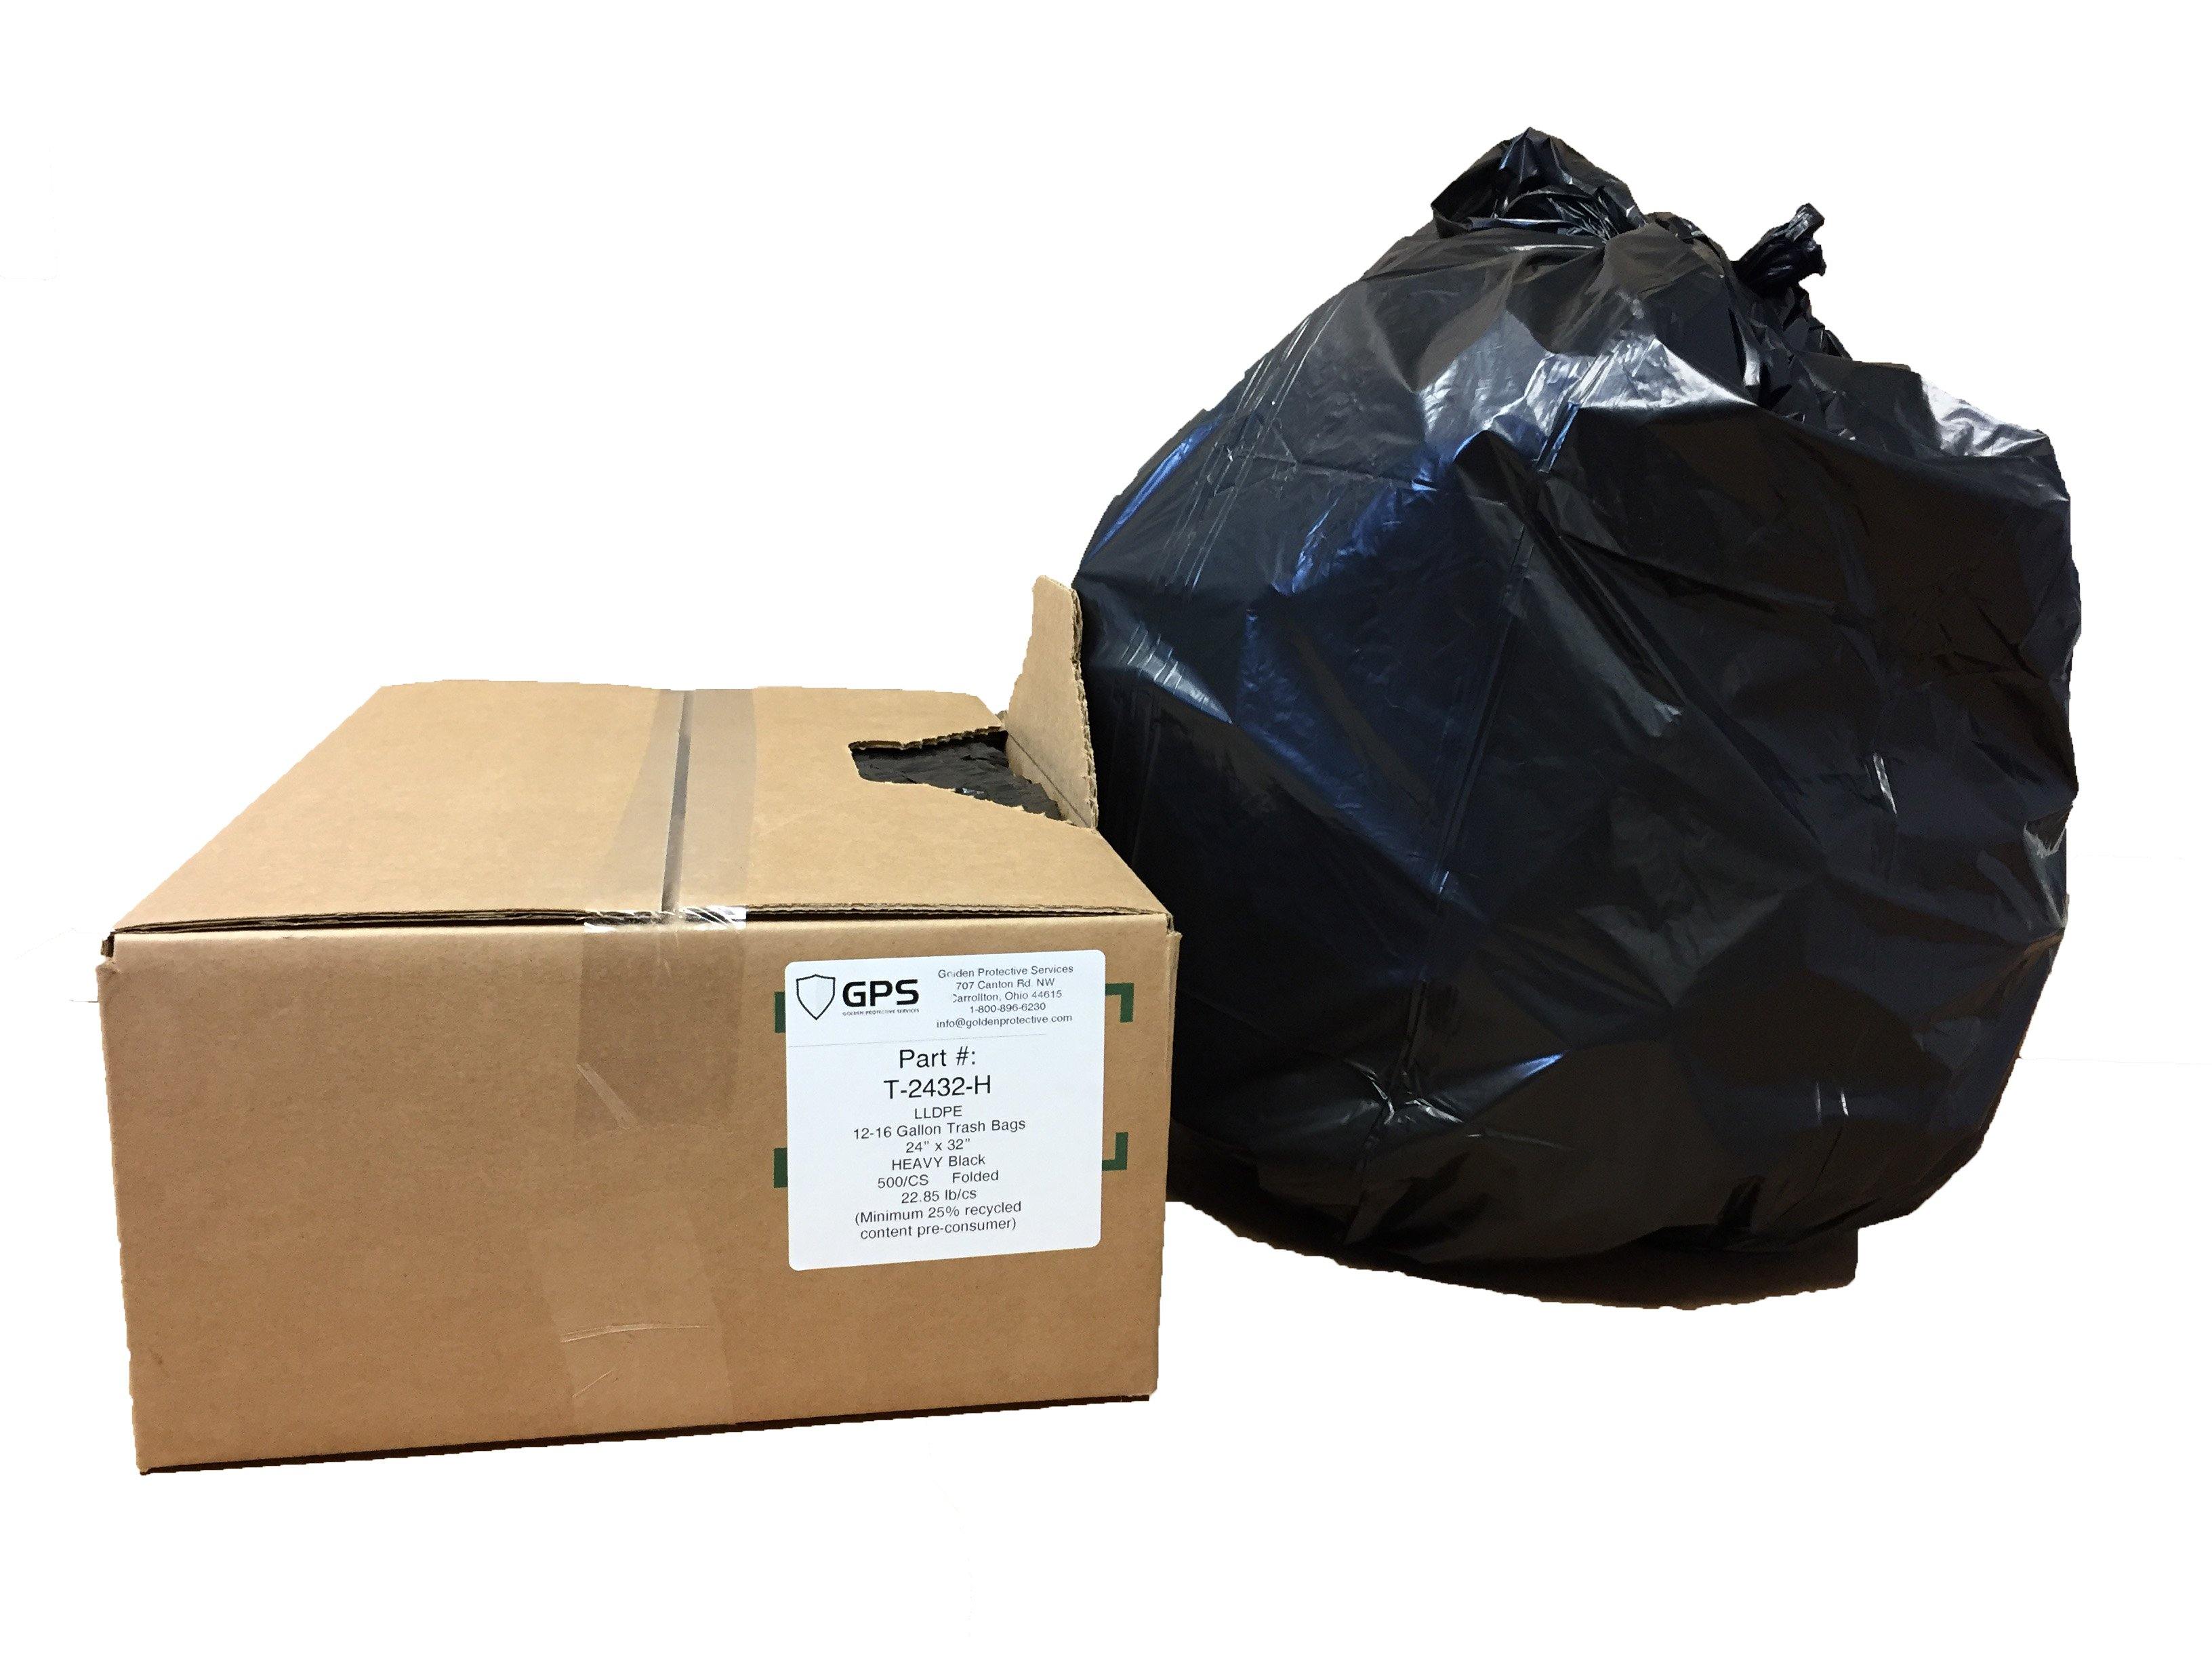 12-16 Gal. Black Trash Bags (Case of 250)